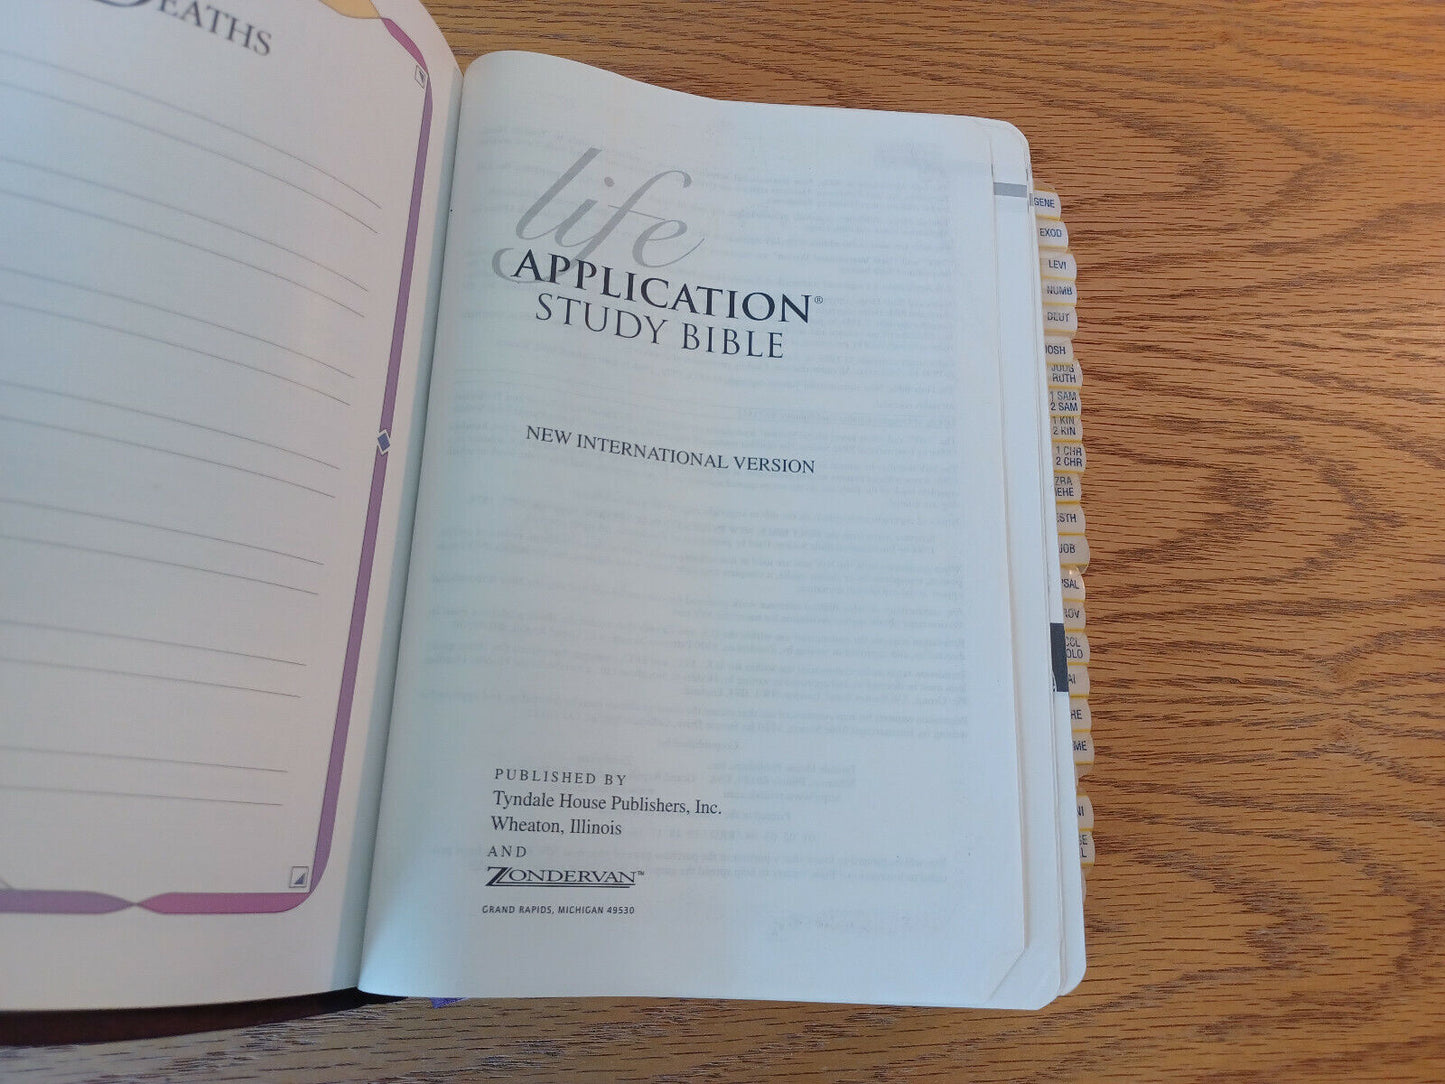 Life Application Study Bible New International Version Zondervan Bonded Leather